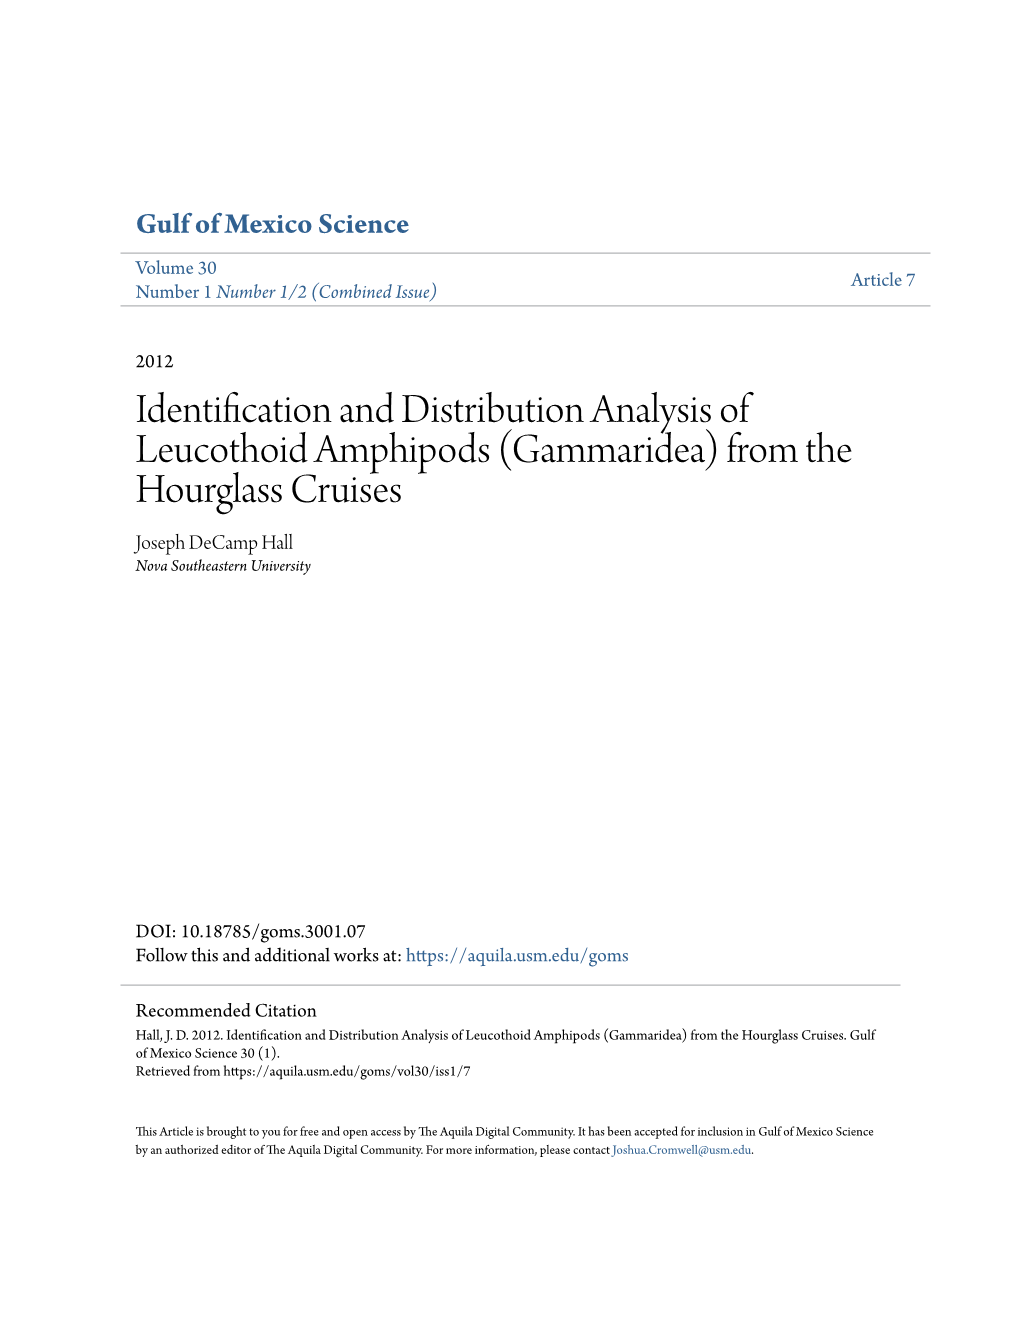 Identification and Distribution Analysis of Leucothoid Amphipods (Gammaridea) from the Hourglass Cruises Joseph Decamp Hall Nova Southeastern University